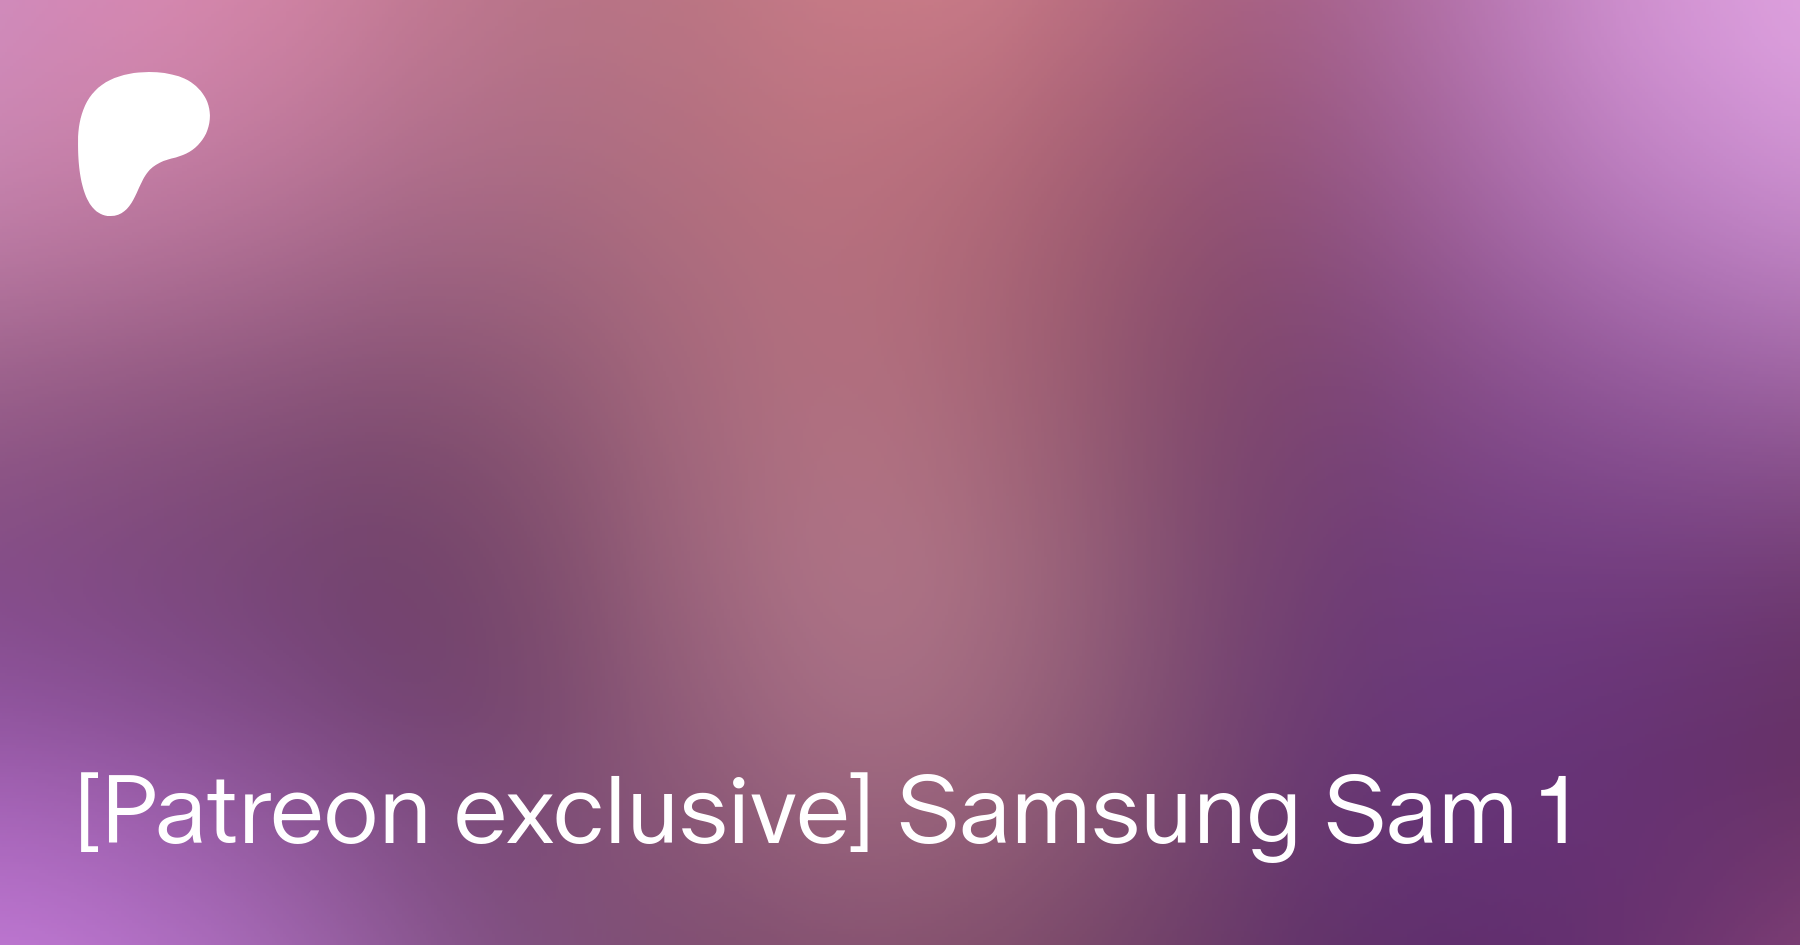 Patreon exclusive] Samsung Sam 1